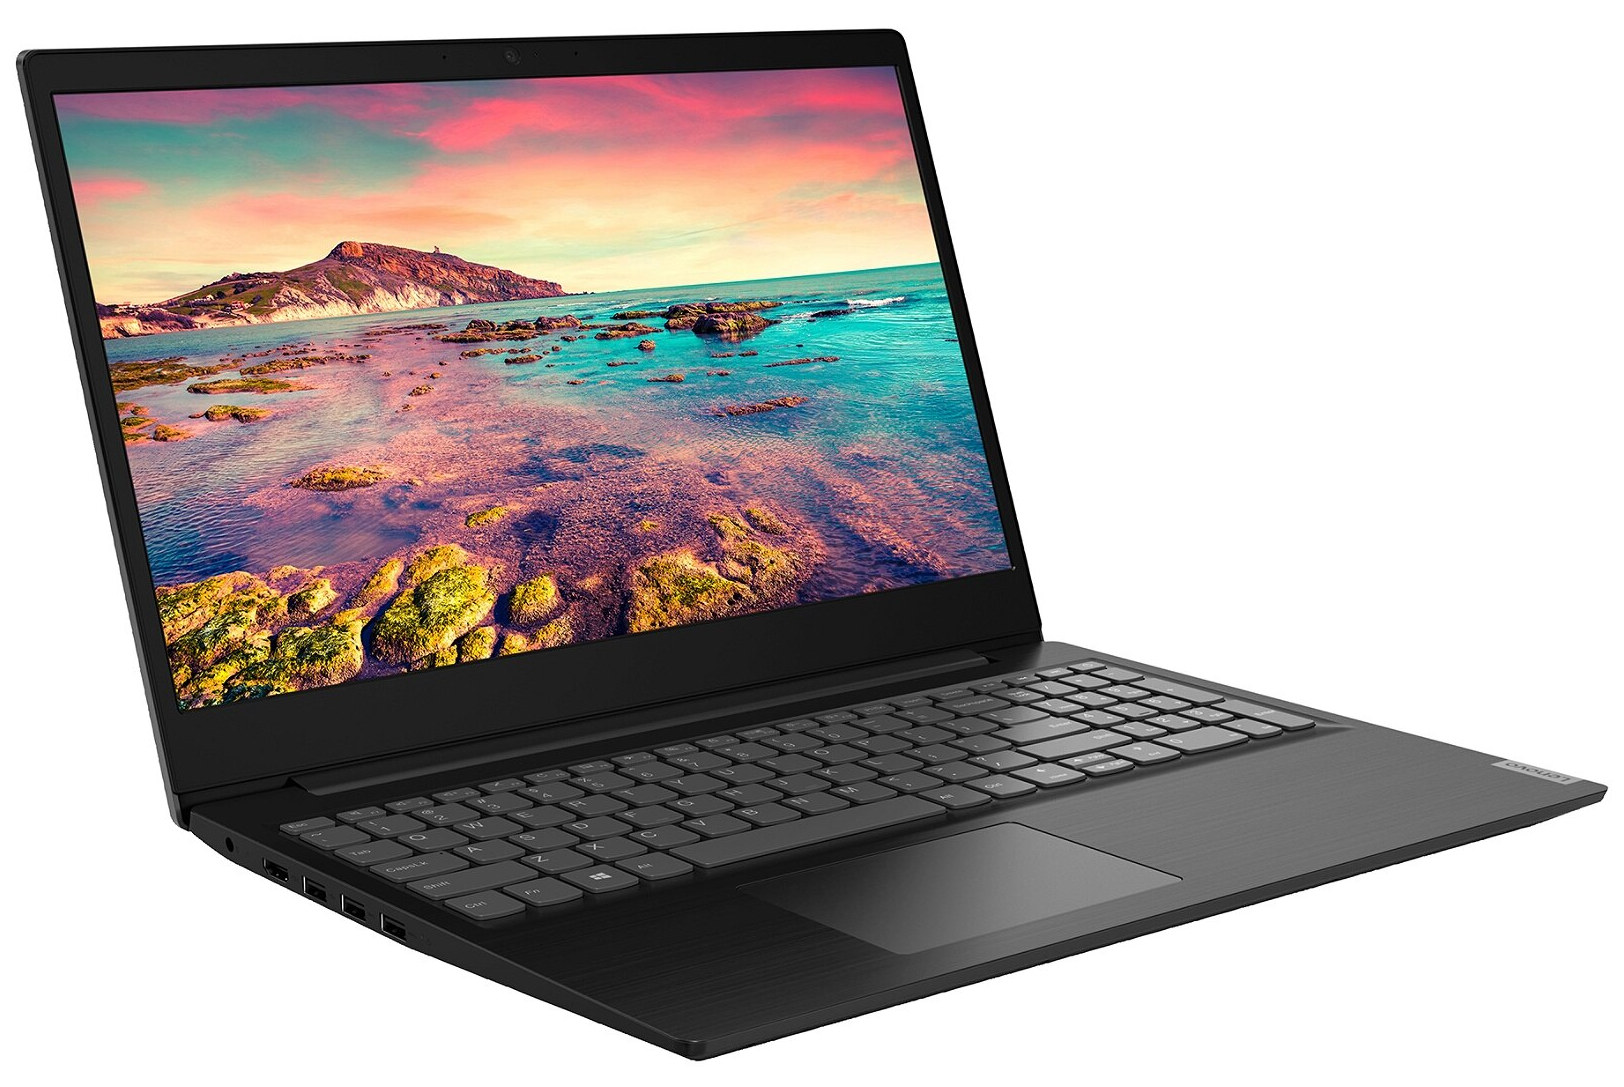 15.6" Lenovo IdeaPad S145 Laptop with AMD Ryzen 5 3500U, Radeon Vega 8